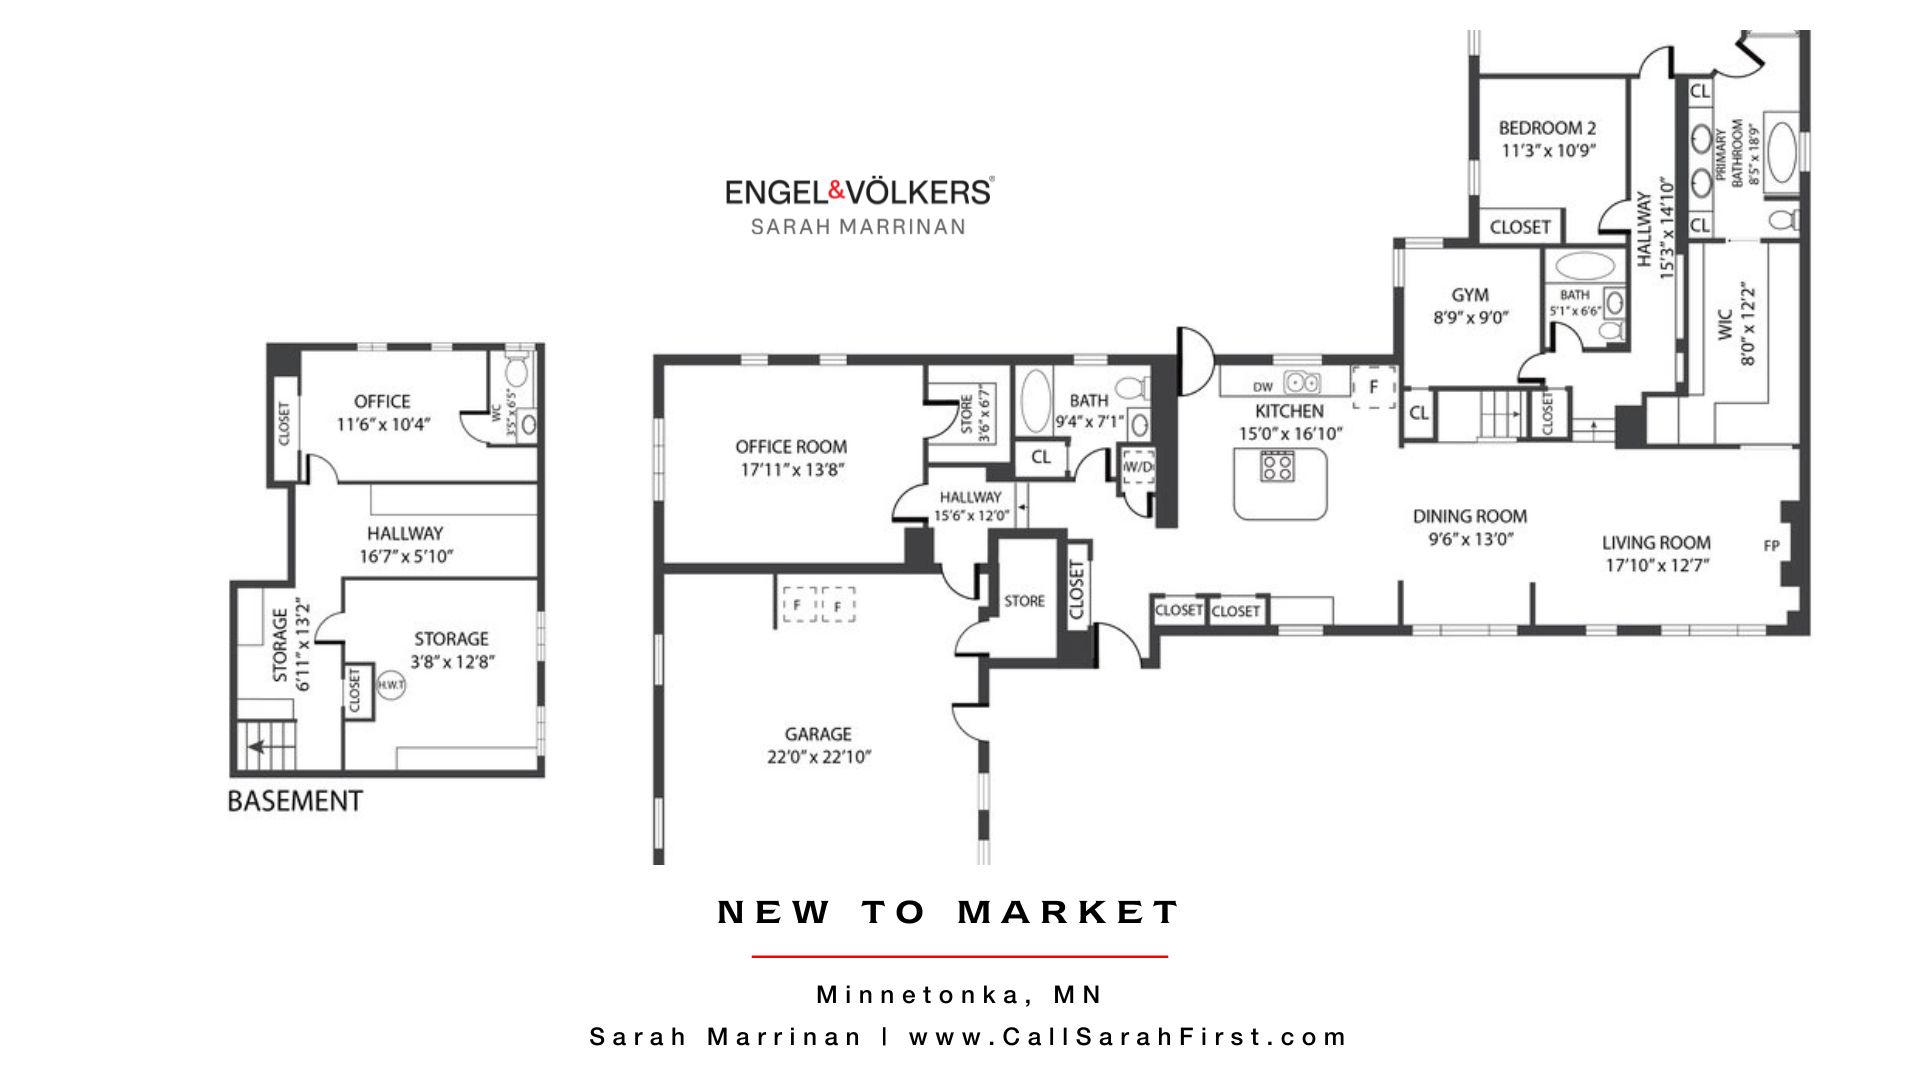 Home for Sale -Floor Plan - Minnesota